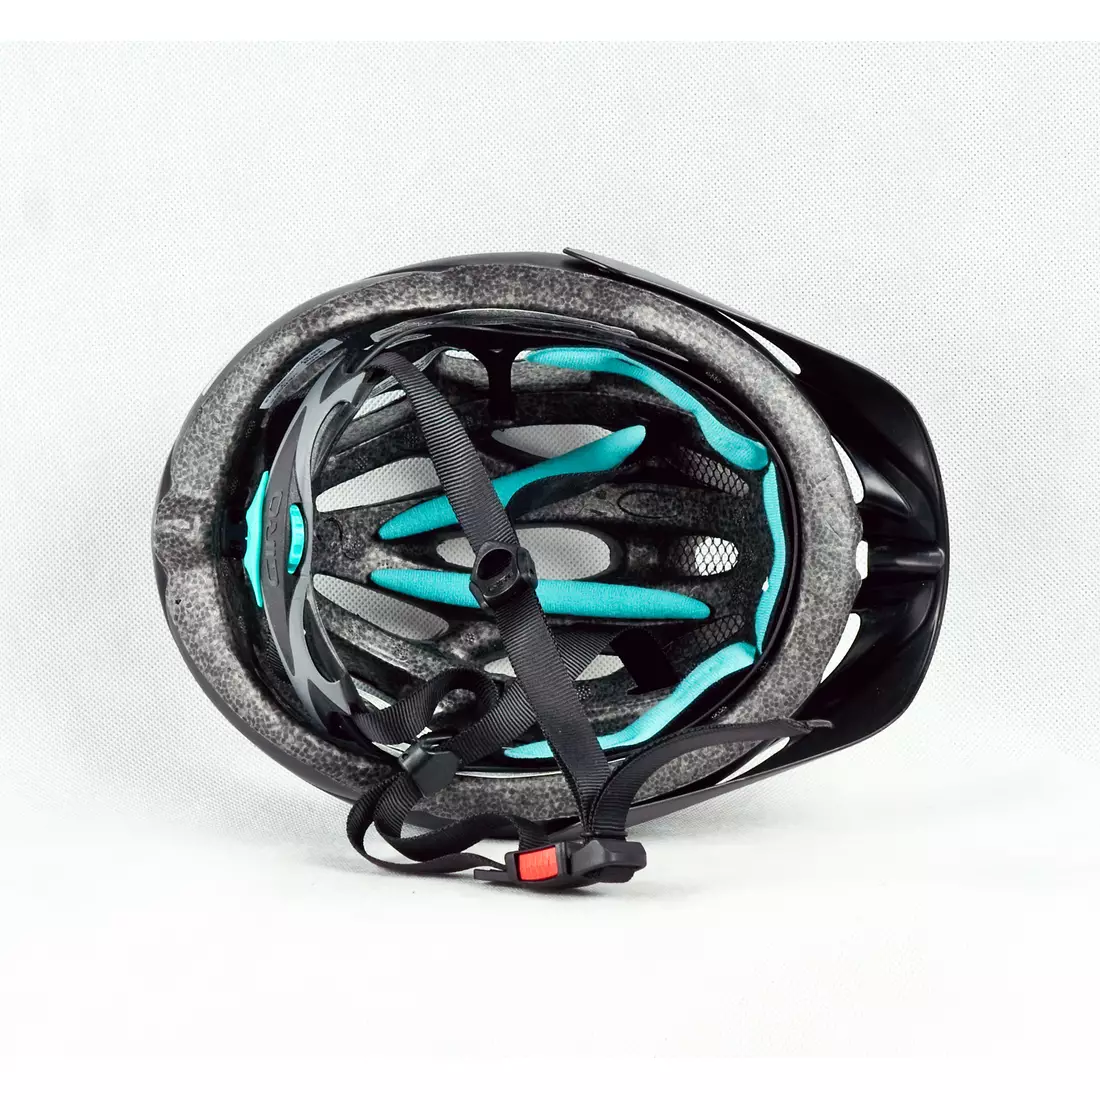 GIRO VERONA women's bicycle helmet, black and teal